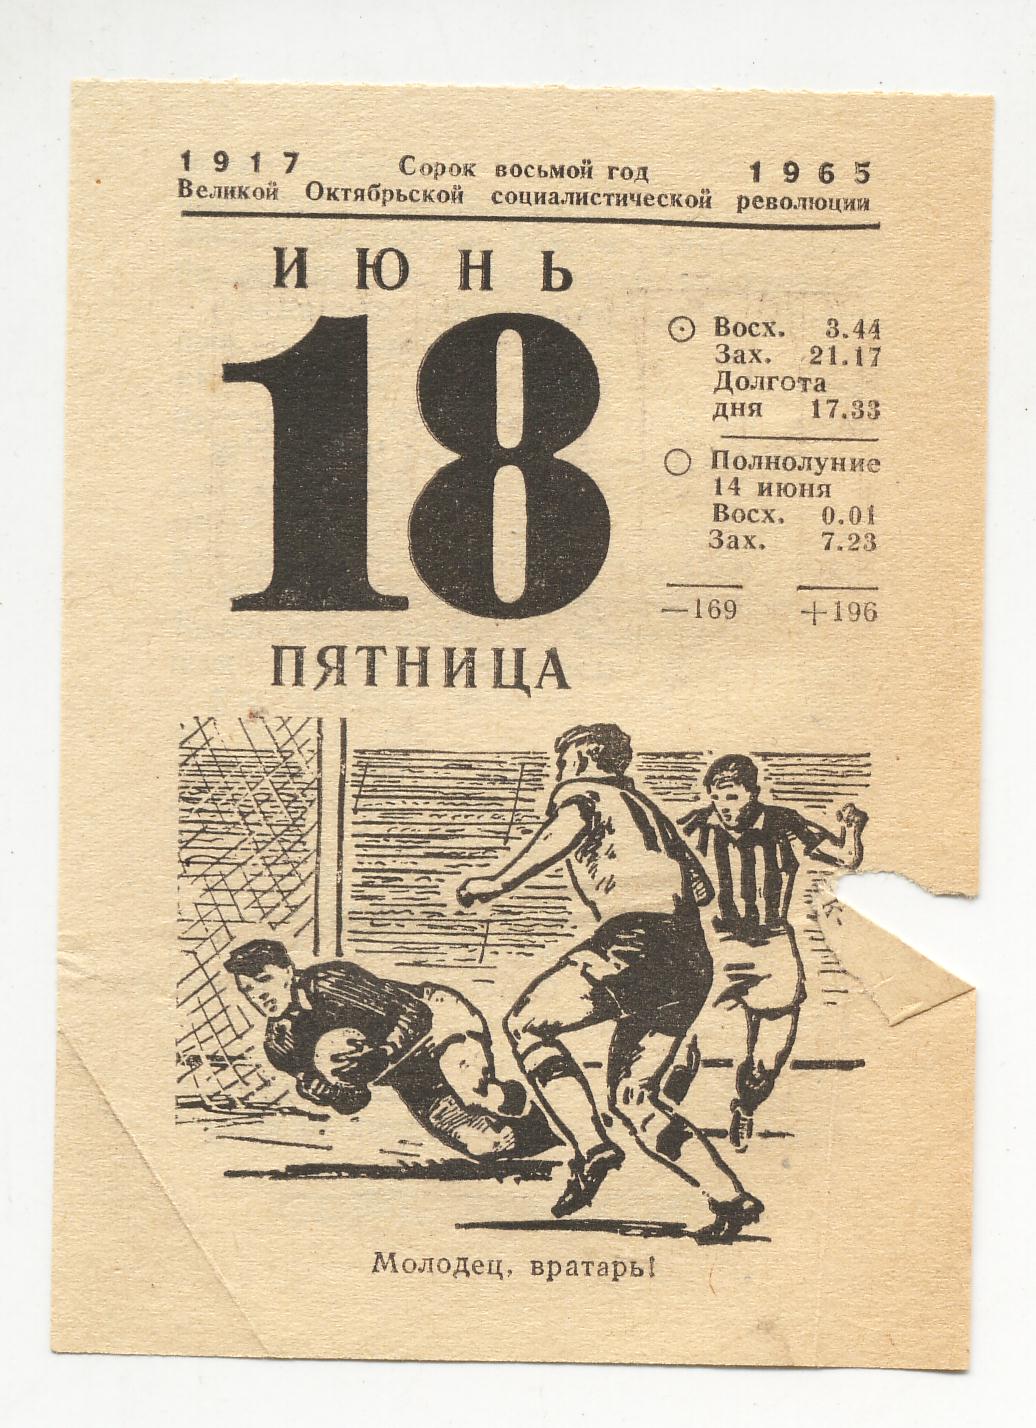 tembamina poster football soccer old 1917 1965 drawing keeper net goalie 18 eightteen